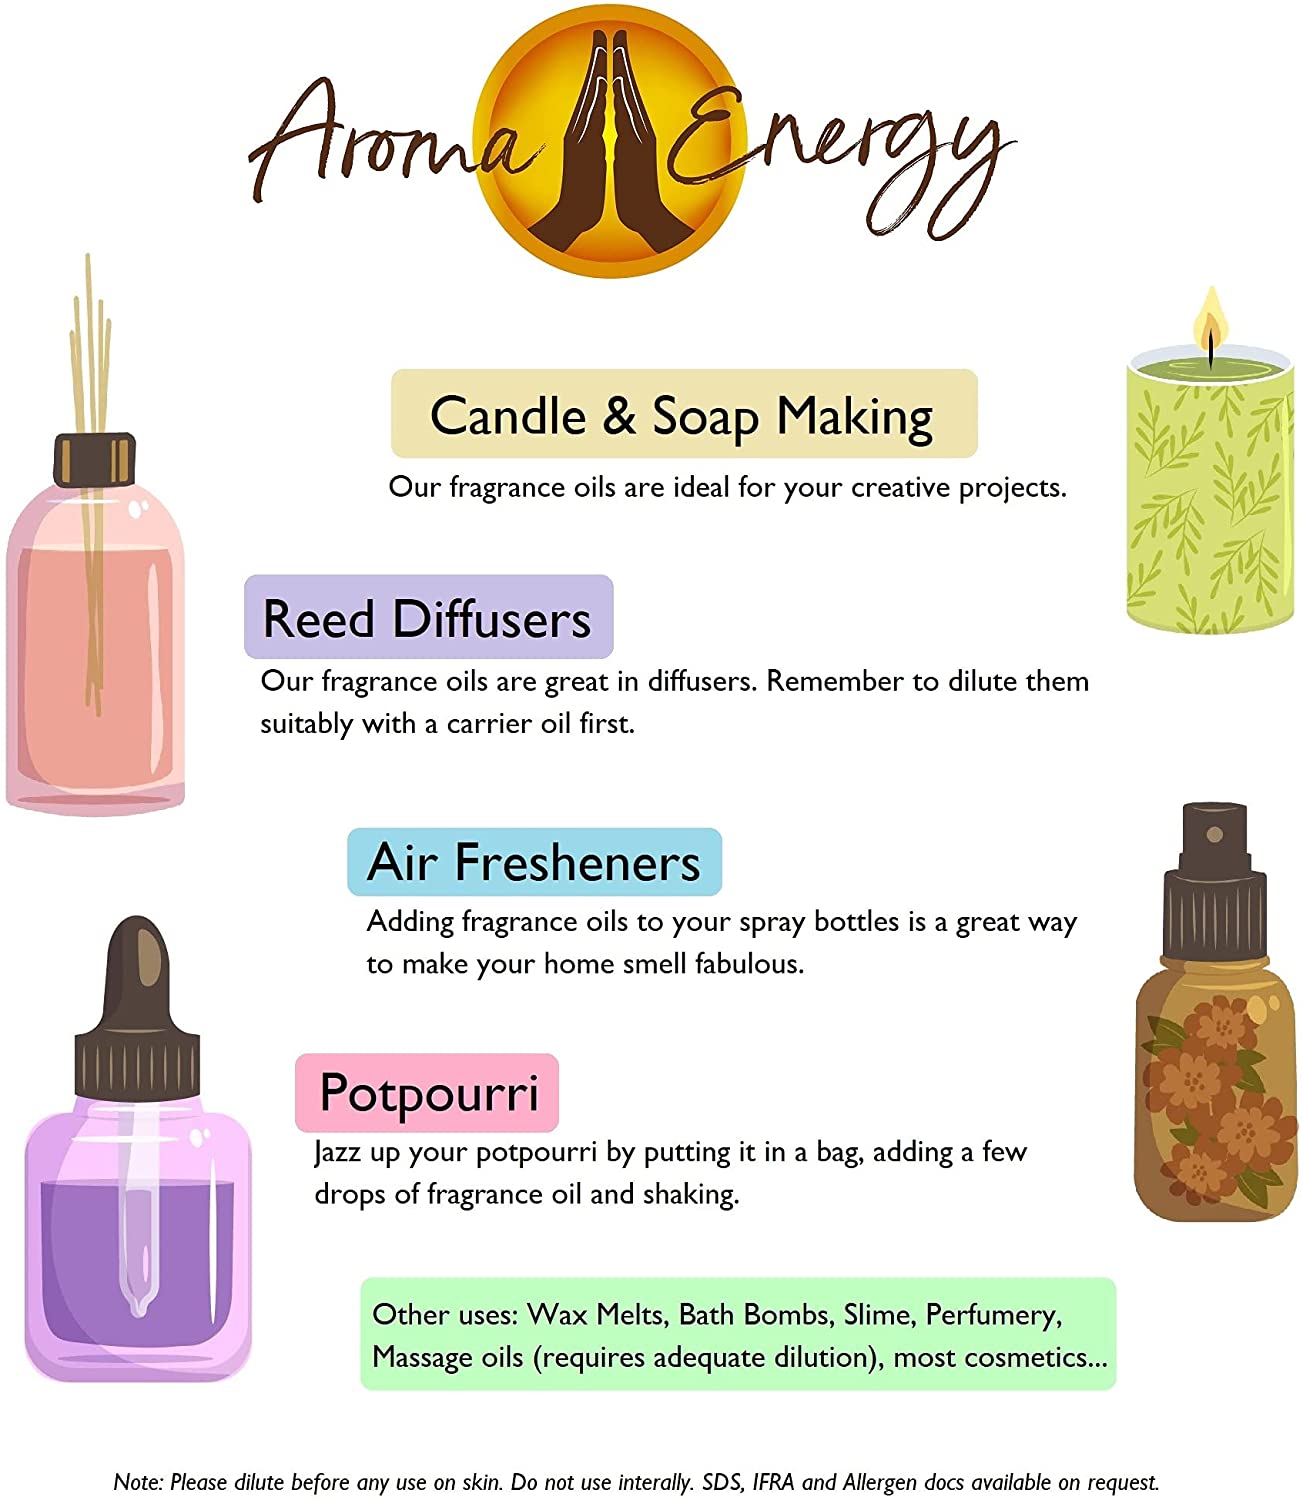 Cherry Vanilla Fragrance Oil - Aroma Energy